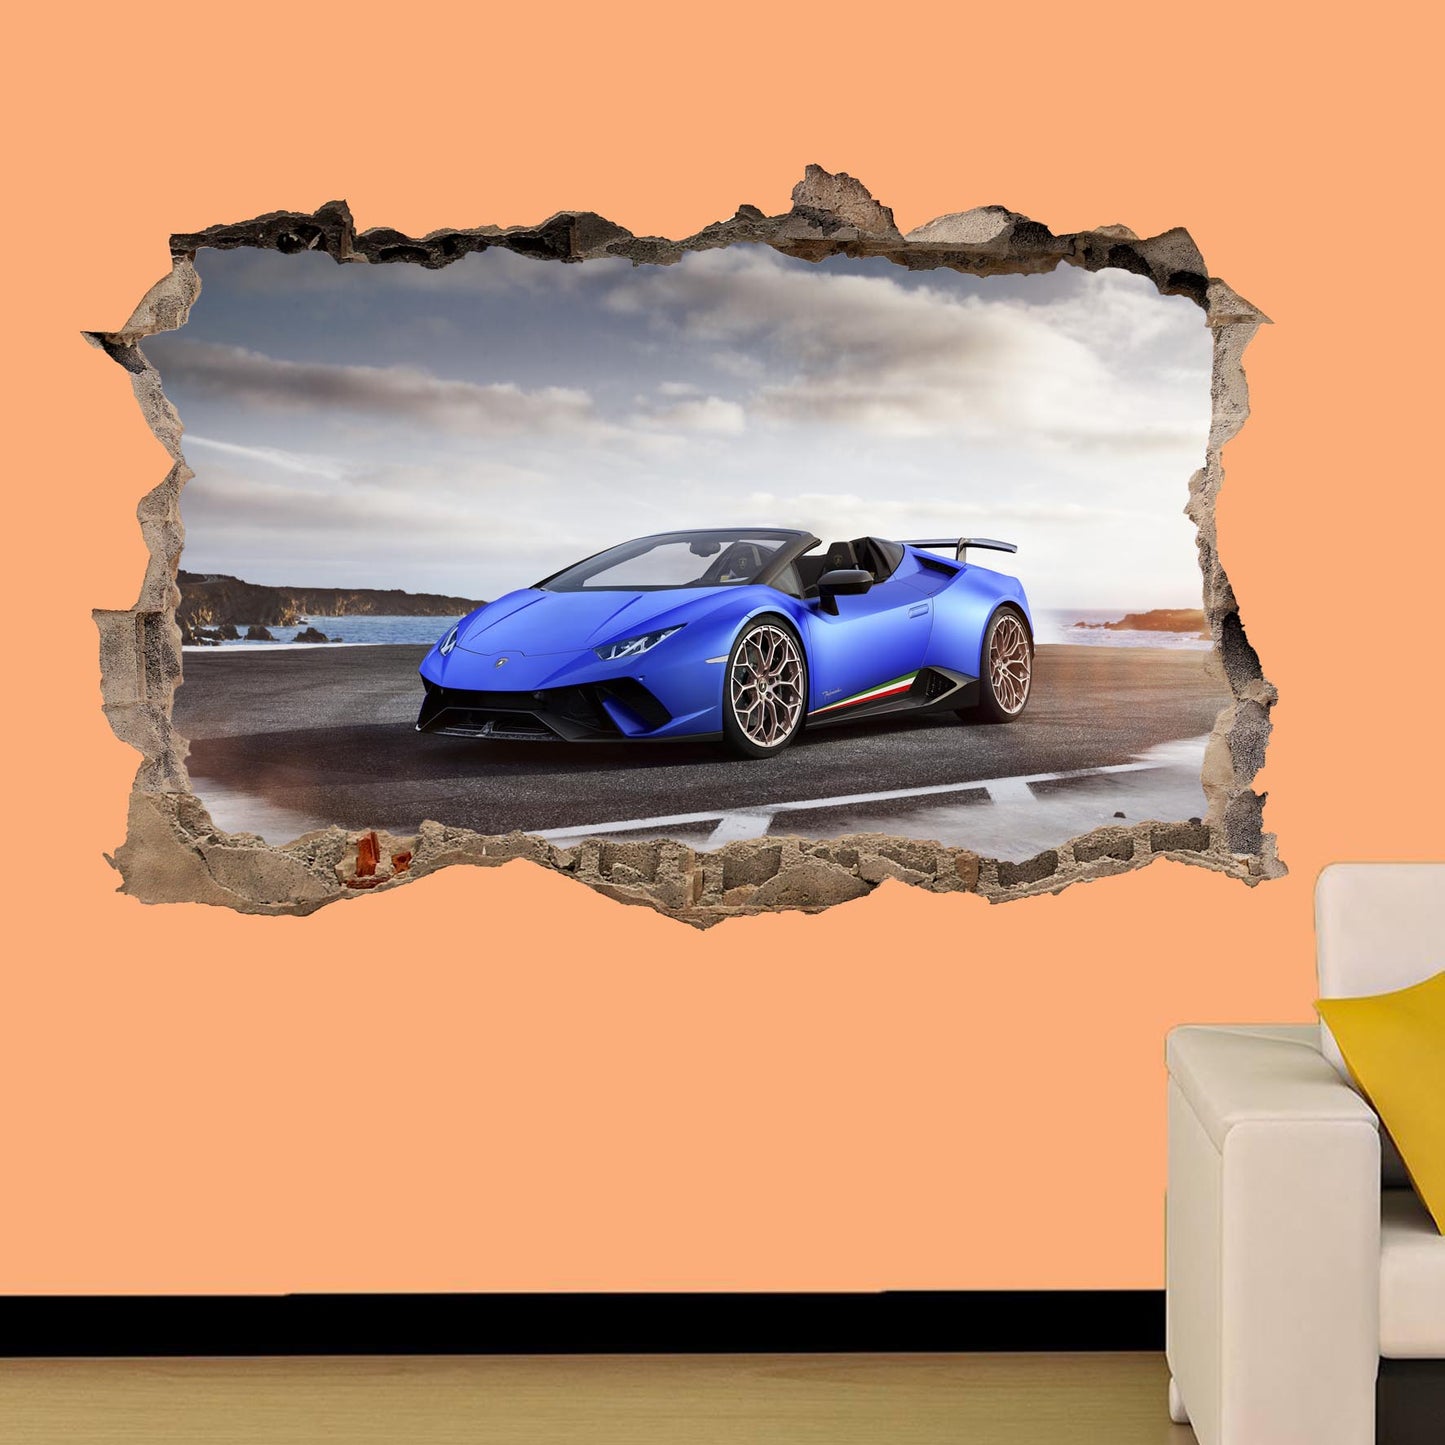 Lamborghini Roadster convertable super sports car poster wall sticker mural decal